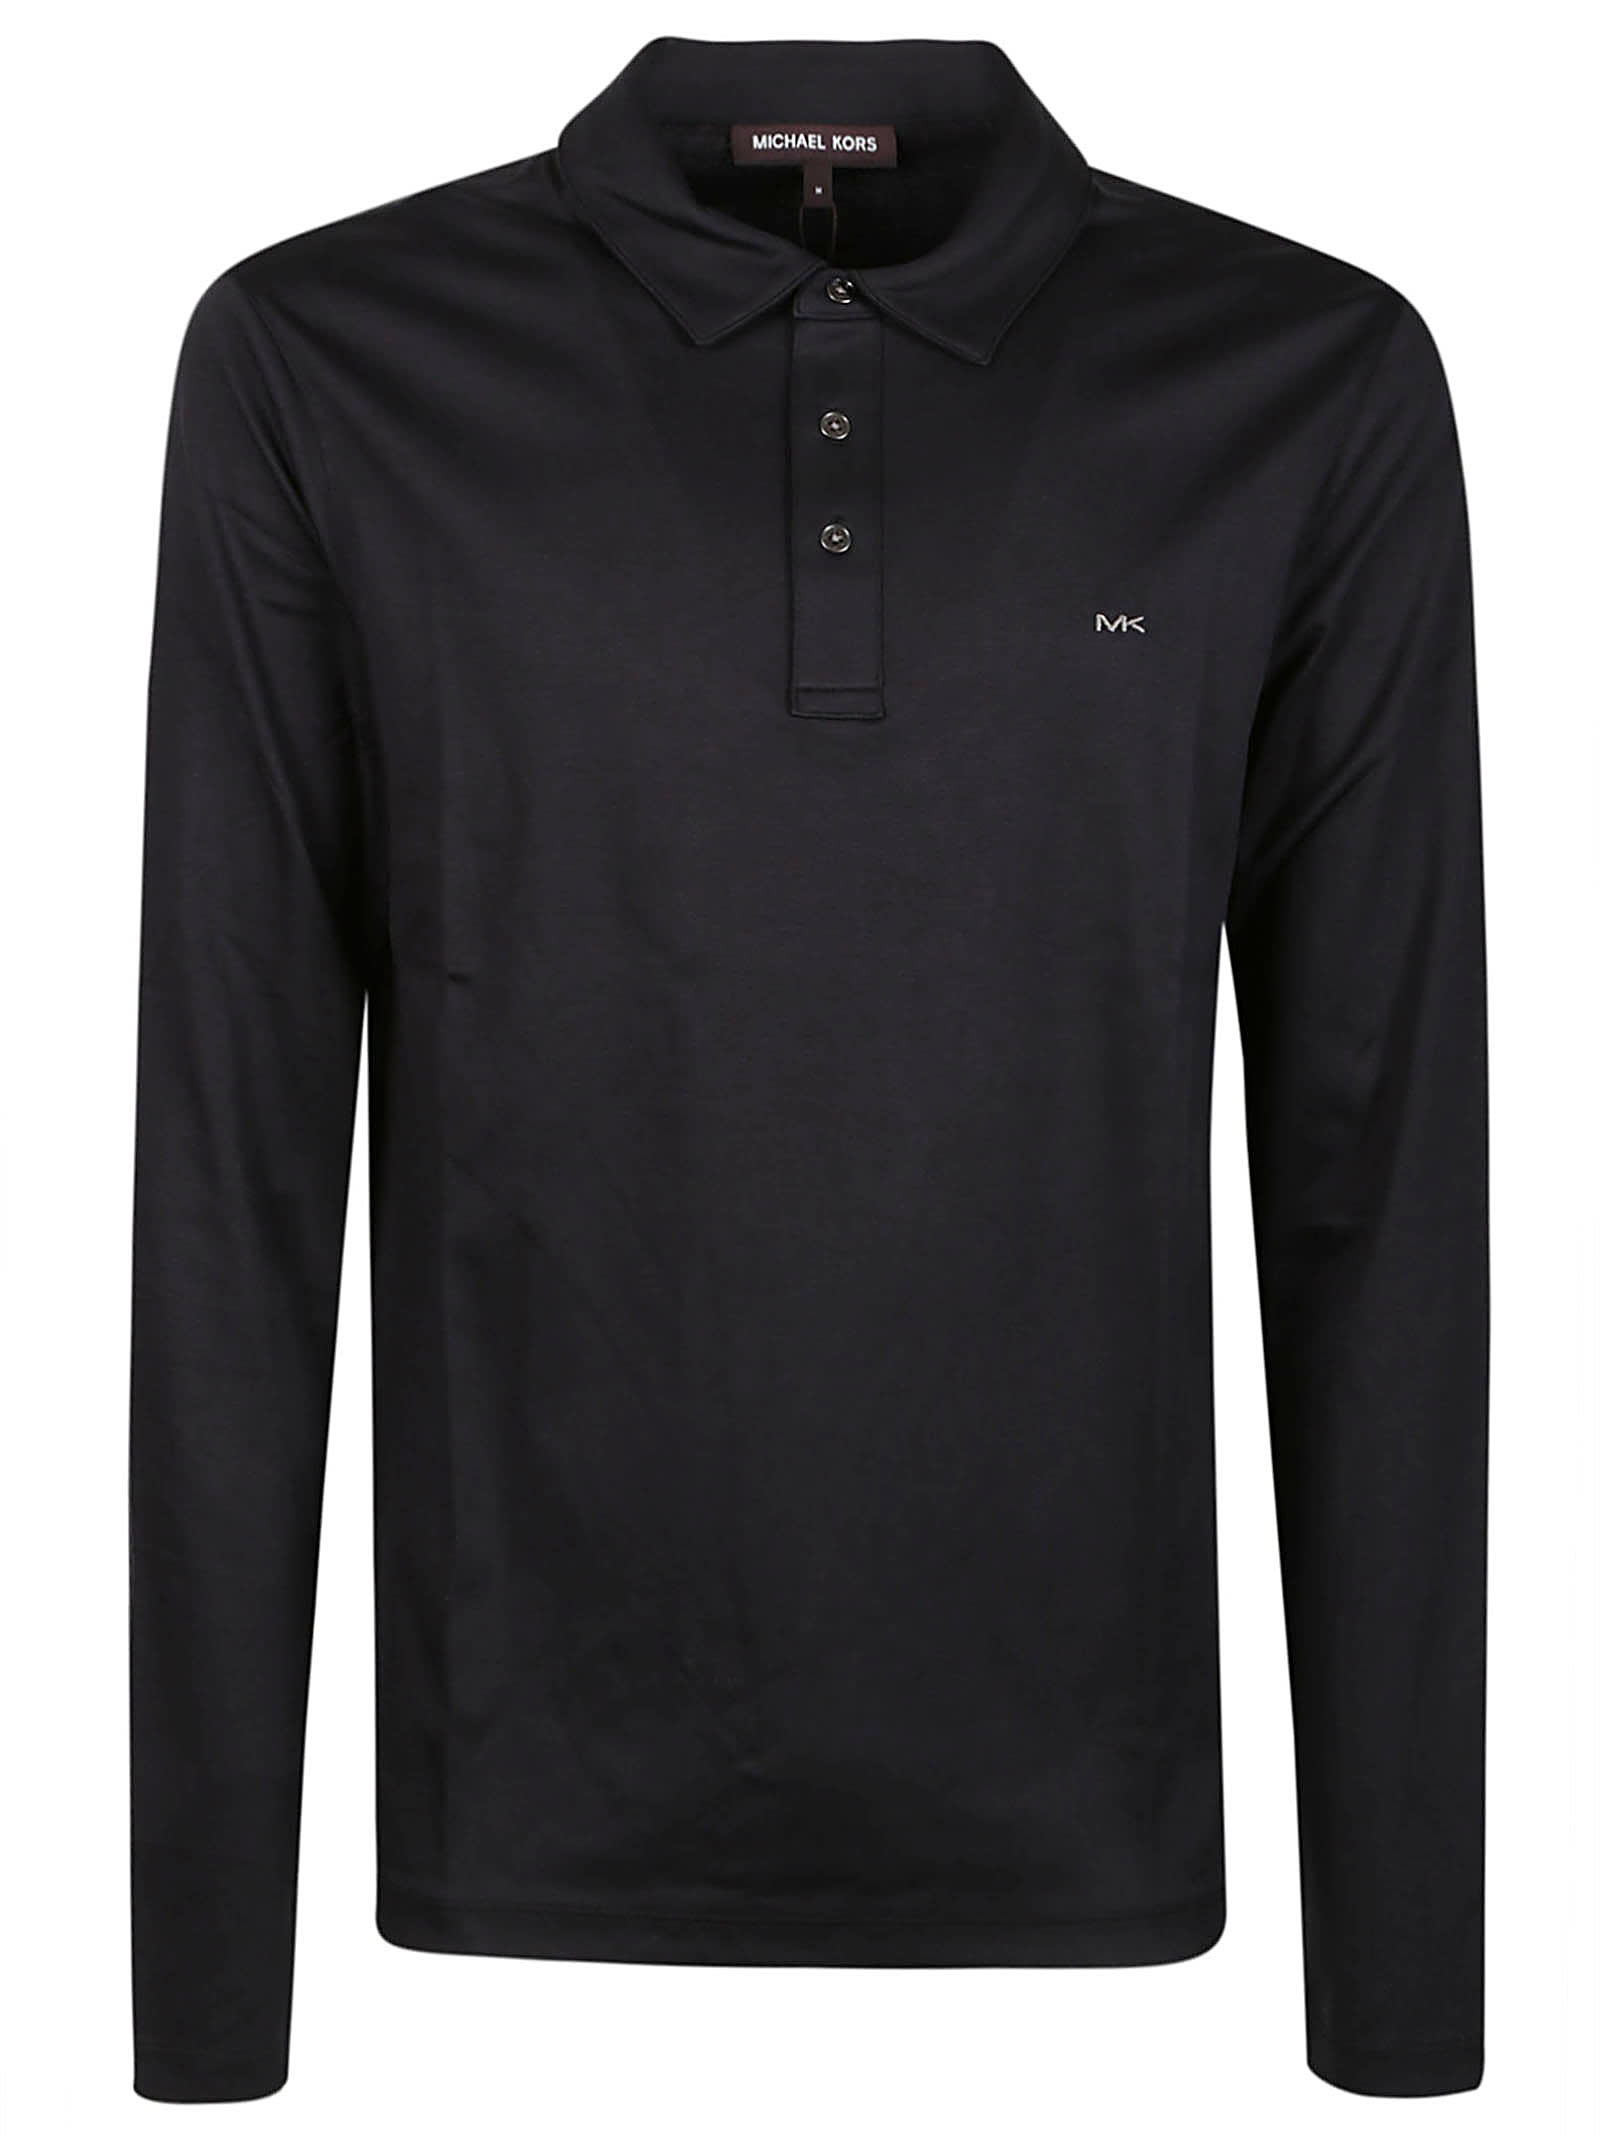 Michael Kors Long Sleeve Sleek Polo Shirt In Black